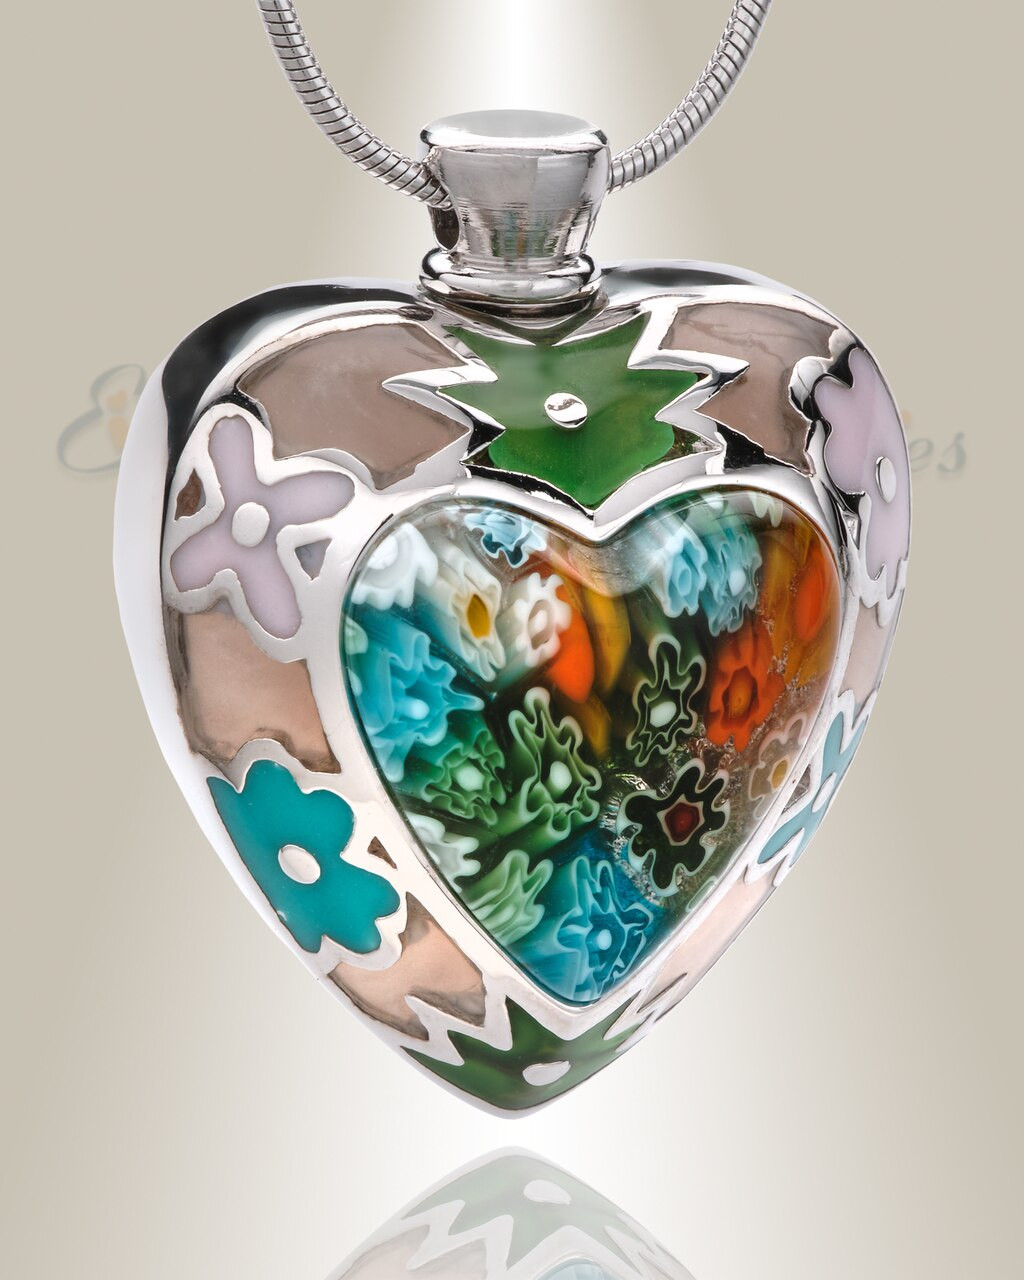 lavish heart cremains pendant to hold ashes